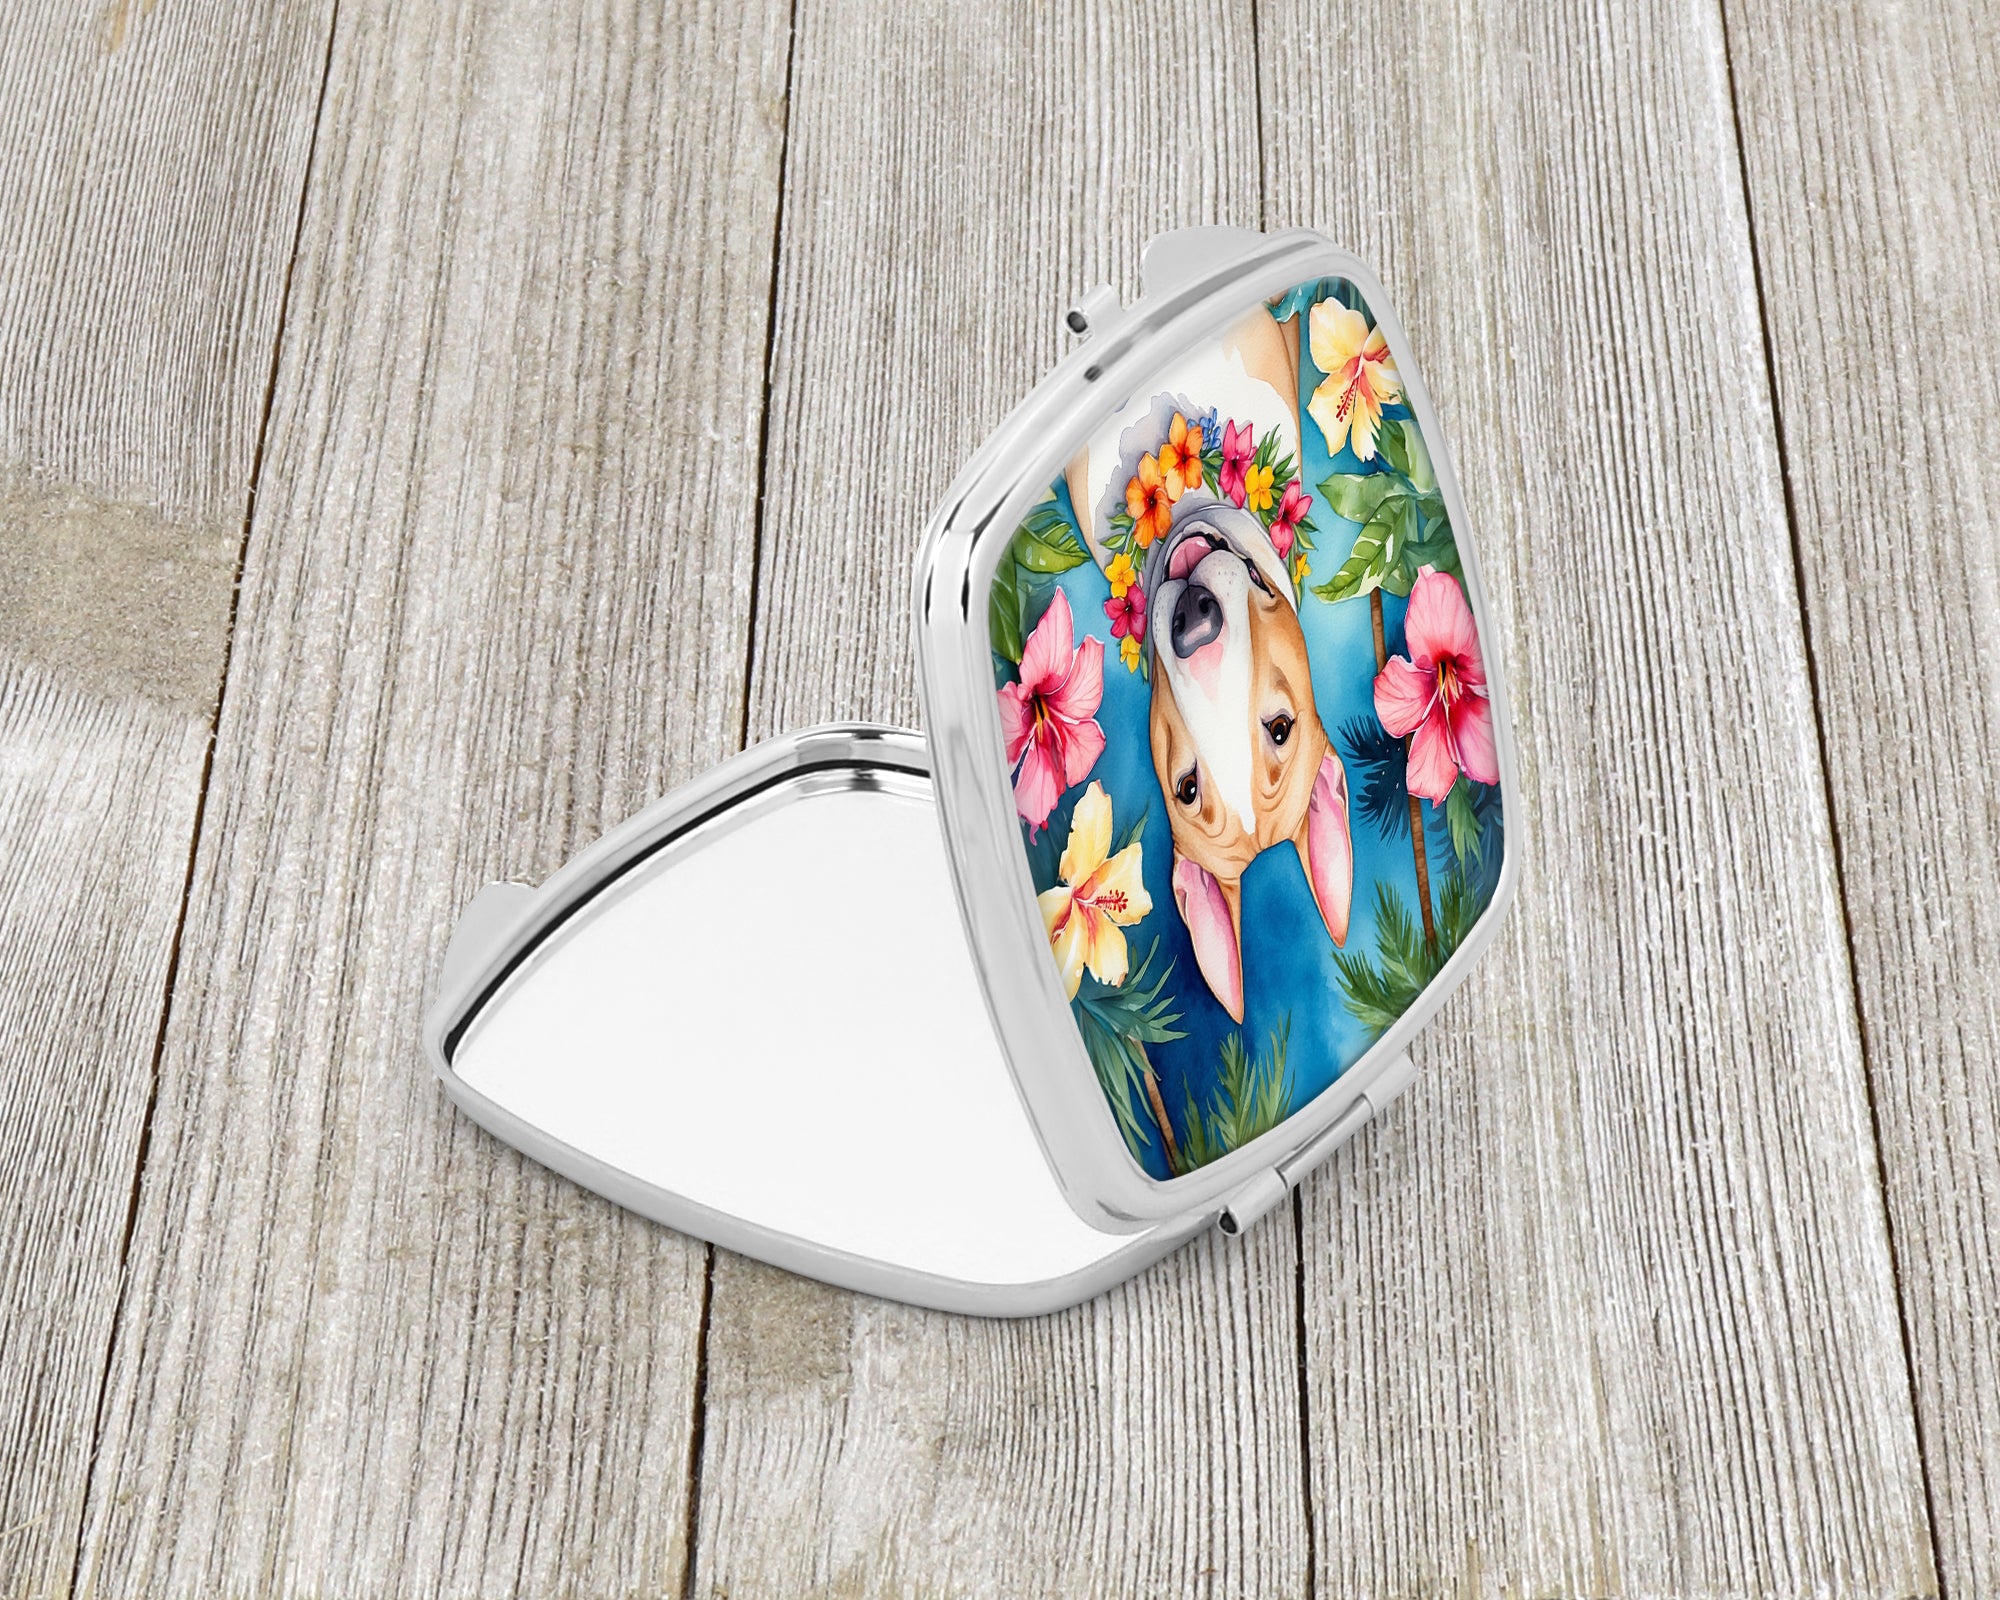 Buy this English Bull Terrier Luau Compact Mirror